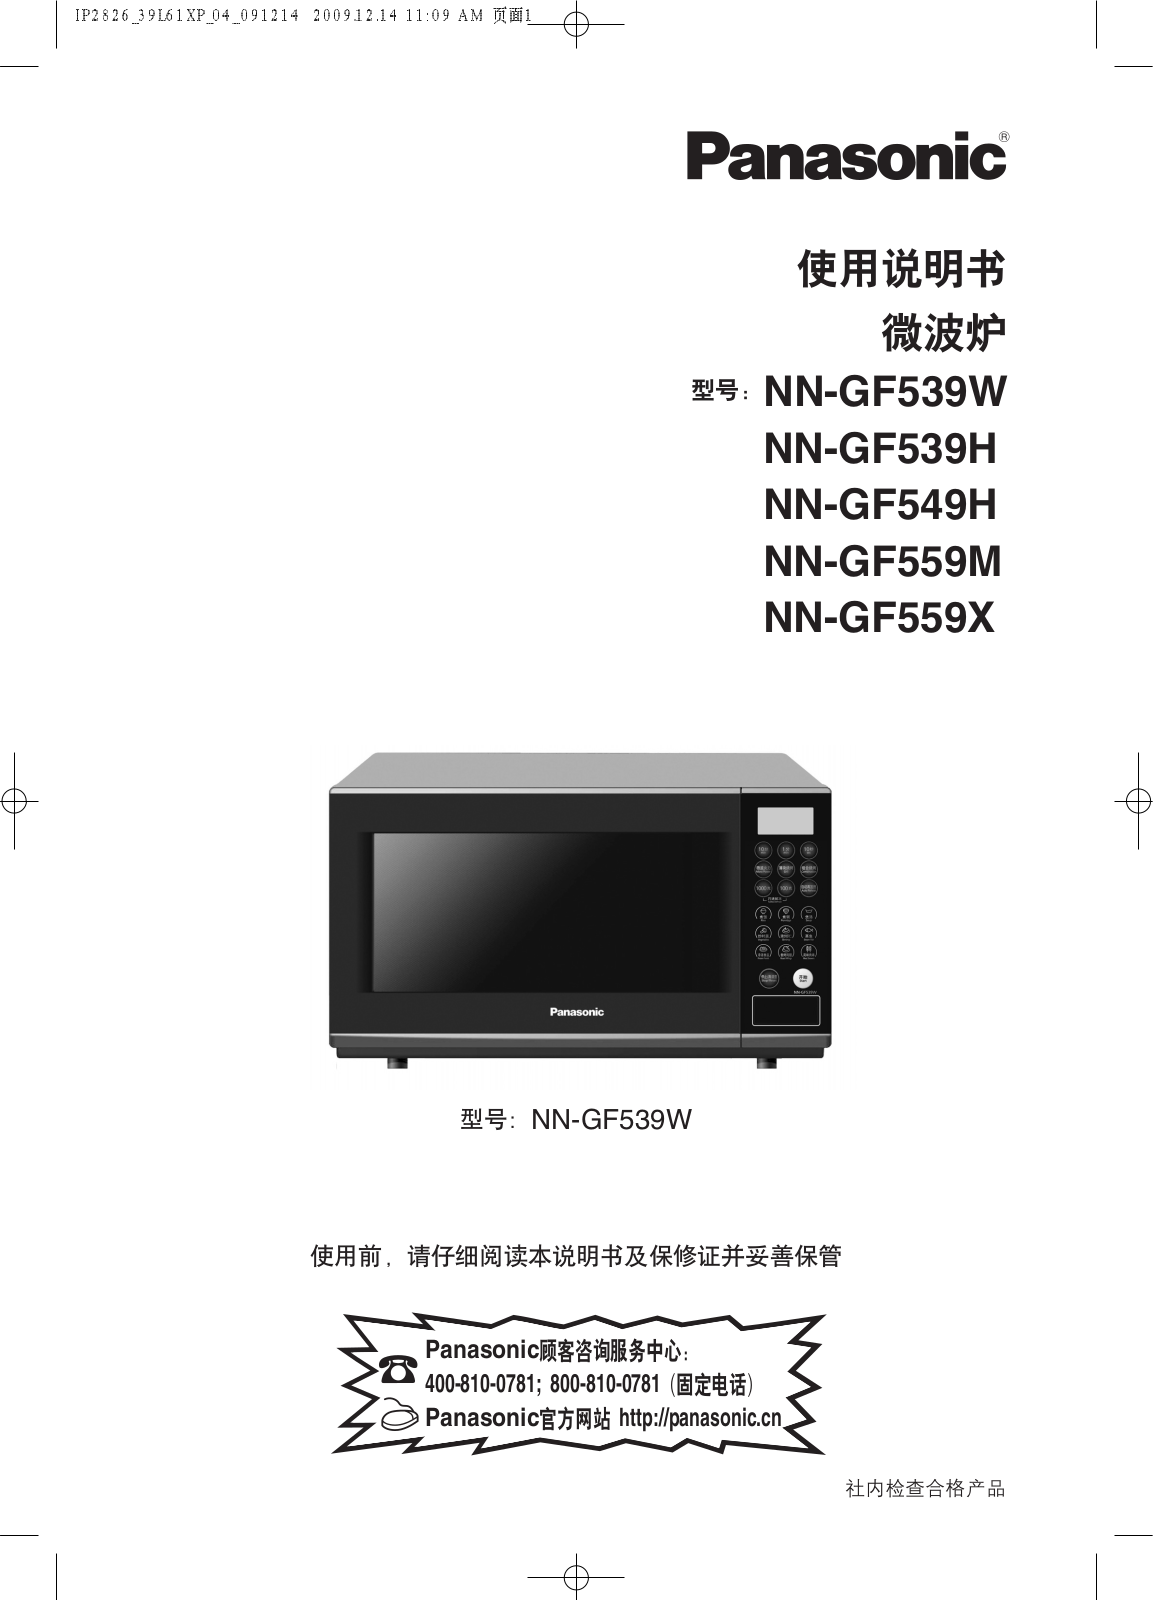 Panasonic NN-GF539W, NN-GF539H, NN-GF549H, NN-GF559M, NN-GF559X User Manual